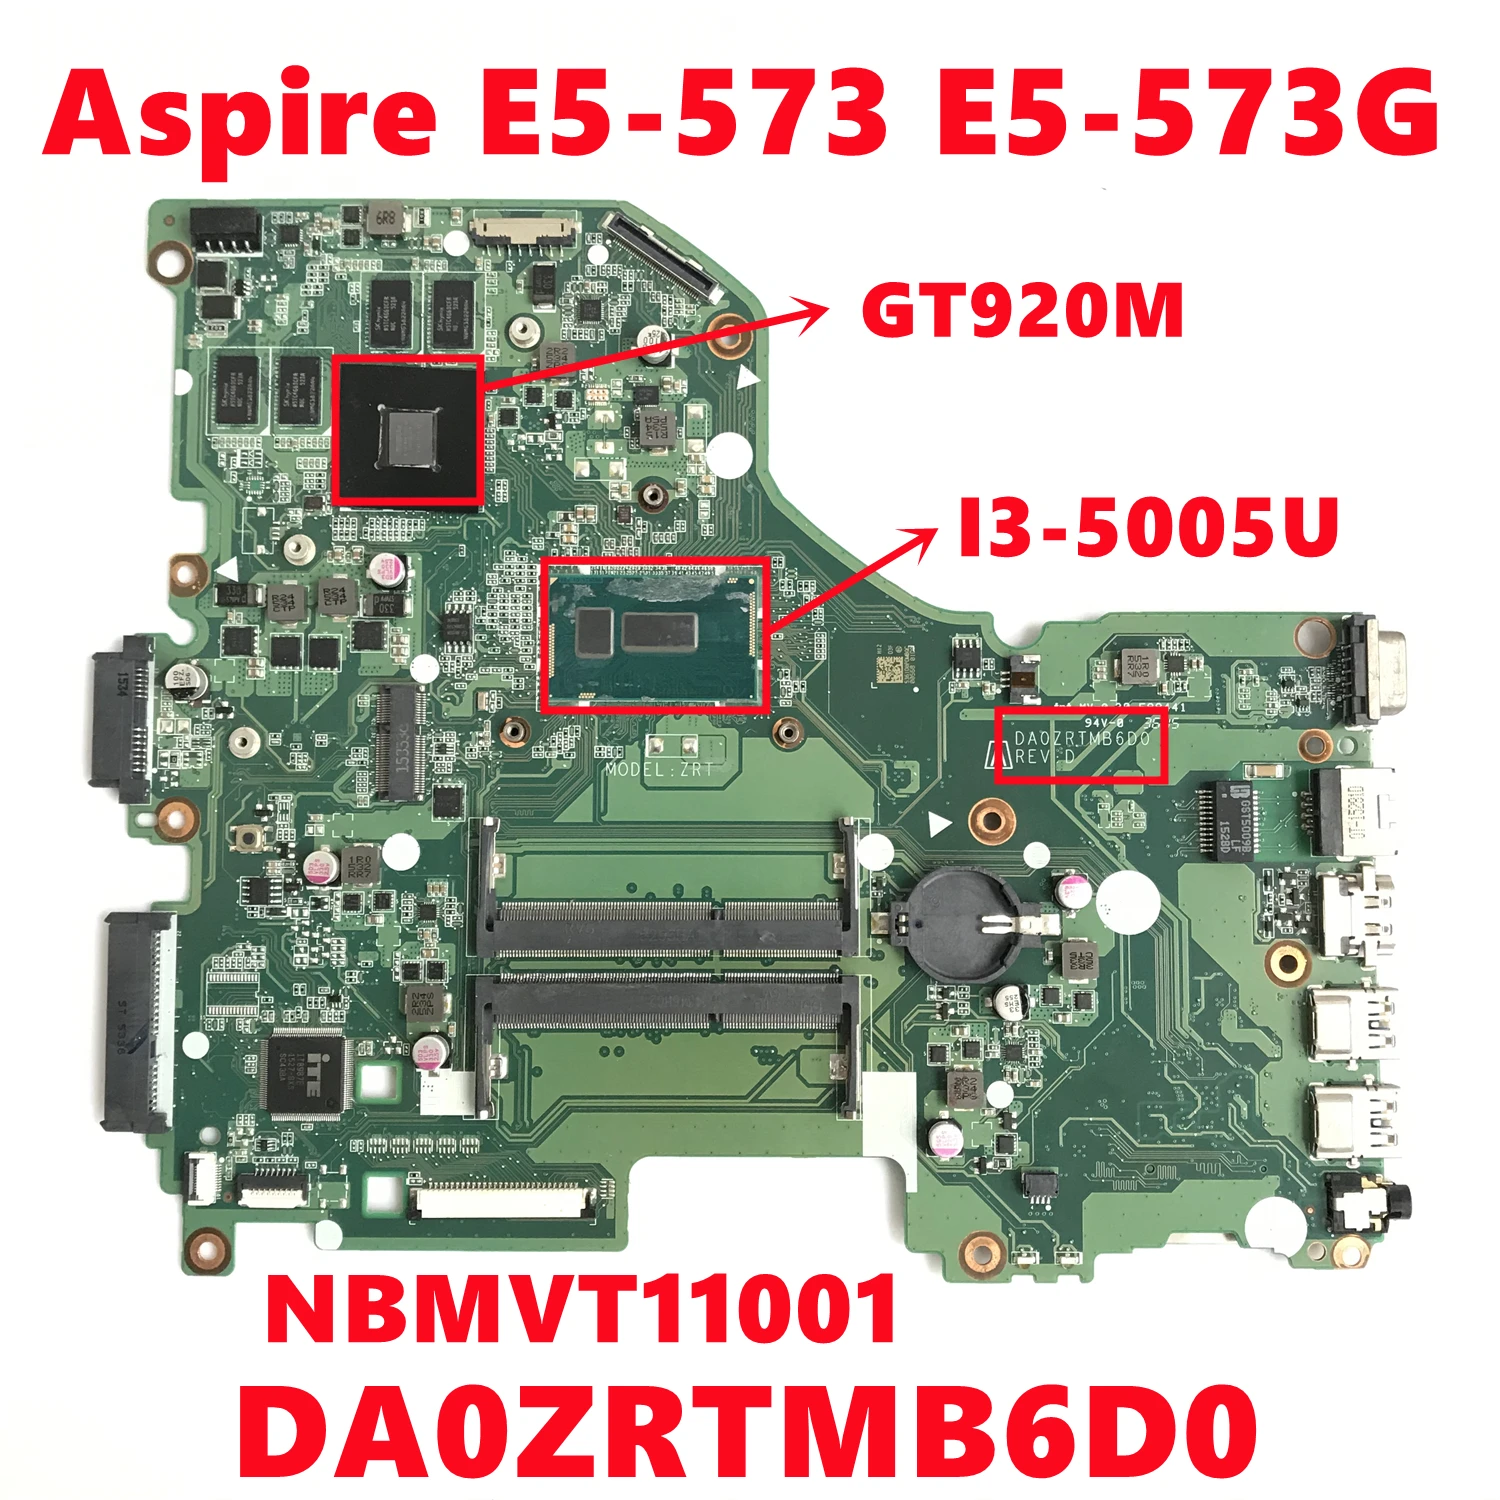   NBMVT11001   Acer Aspire E5-573 E5-573G,     DA0ZRTMB6D0   100%, 